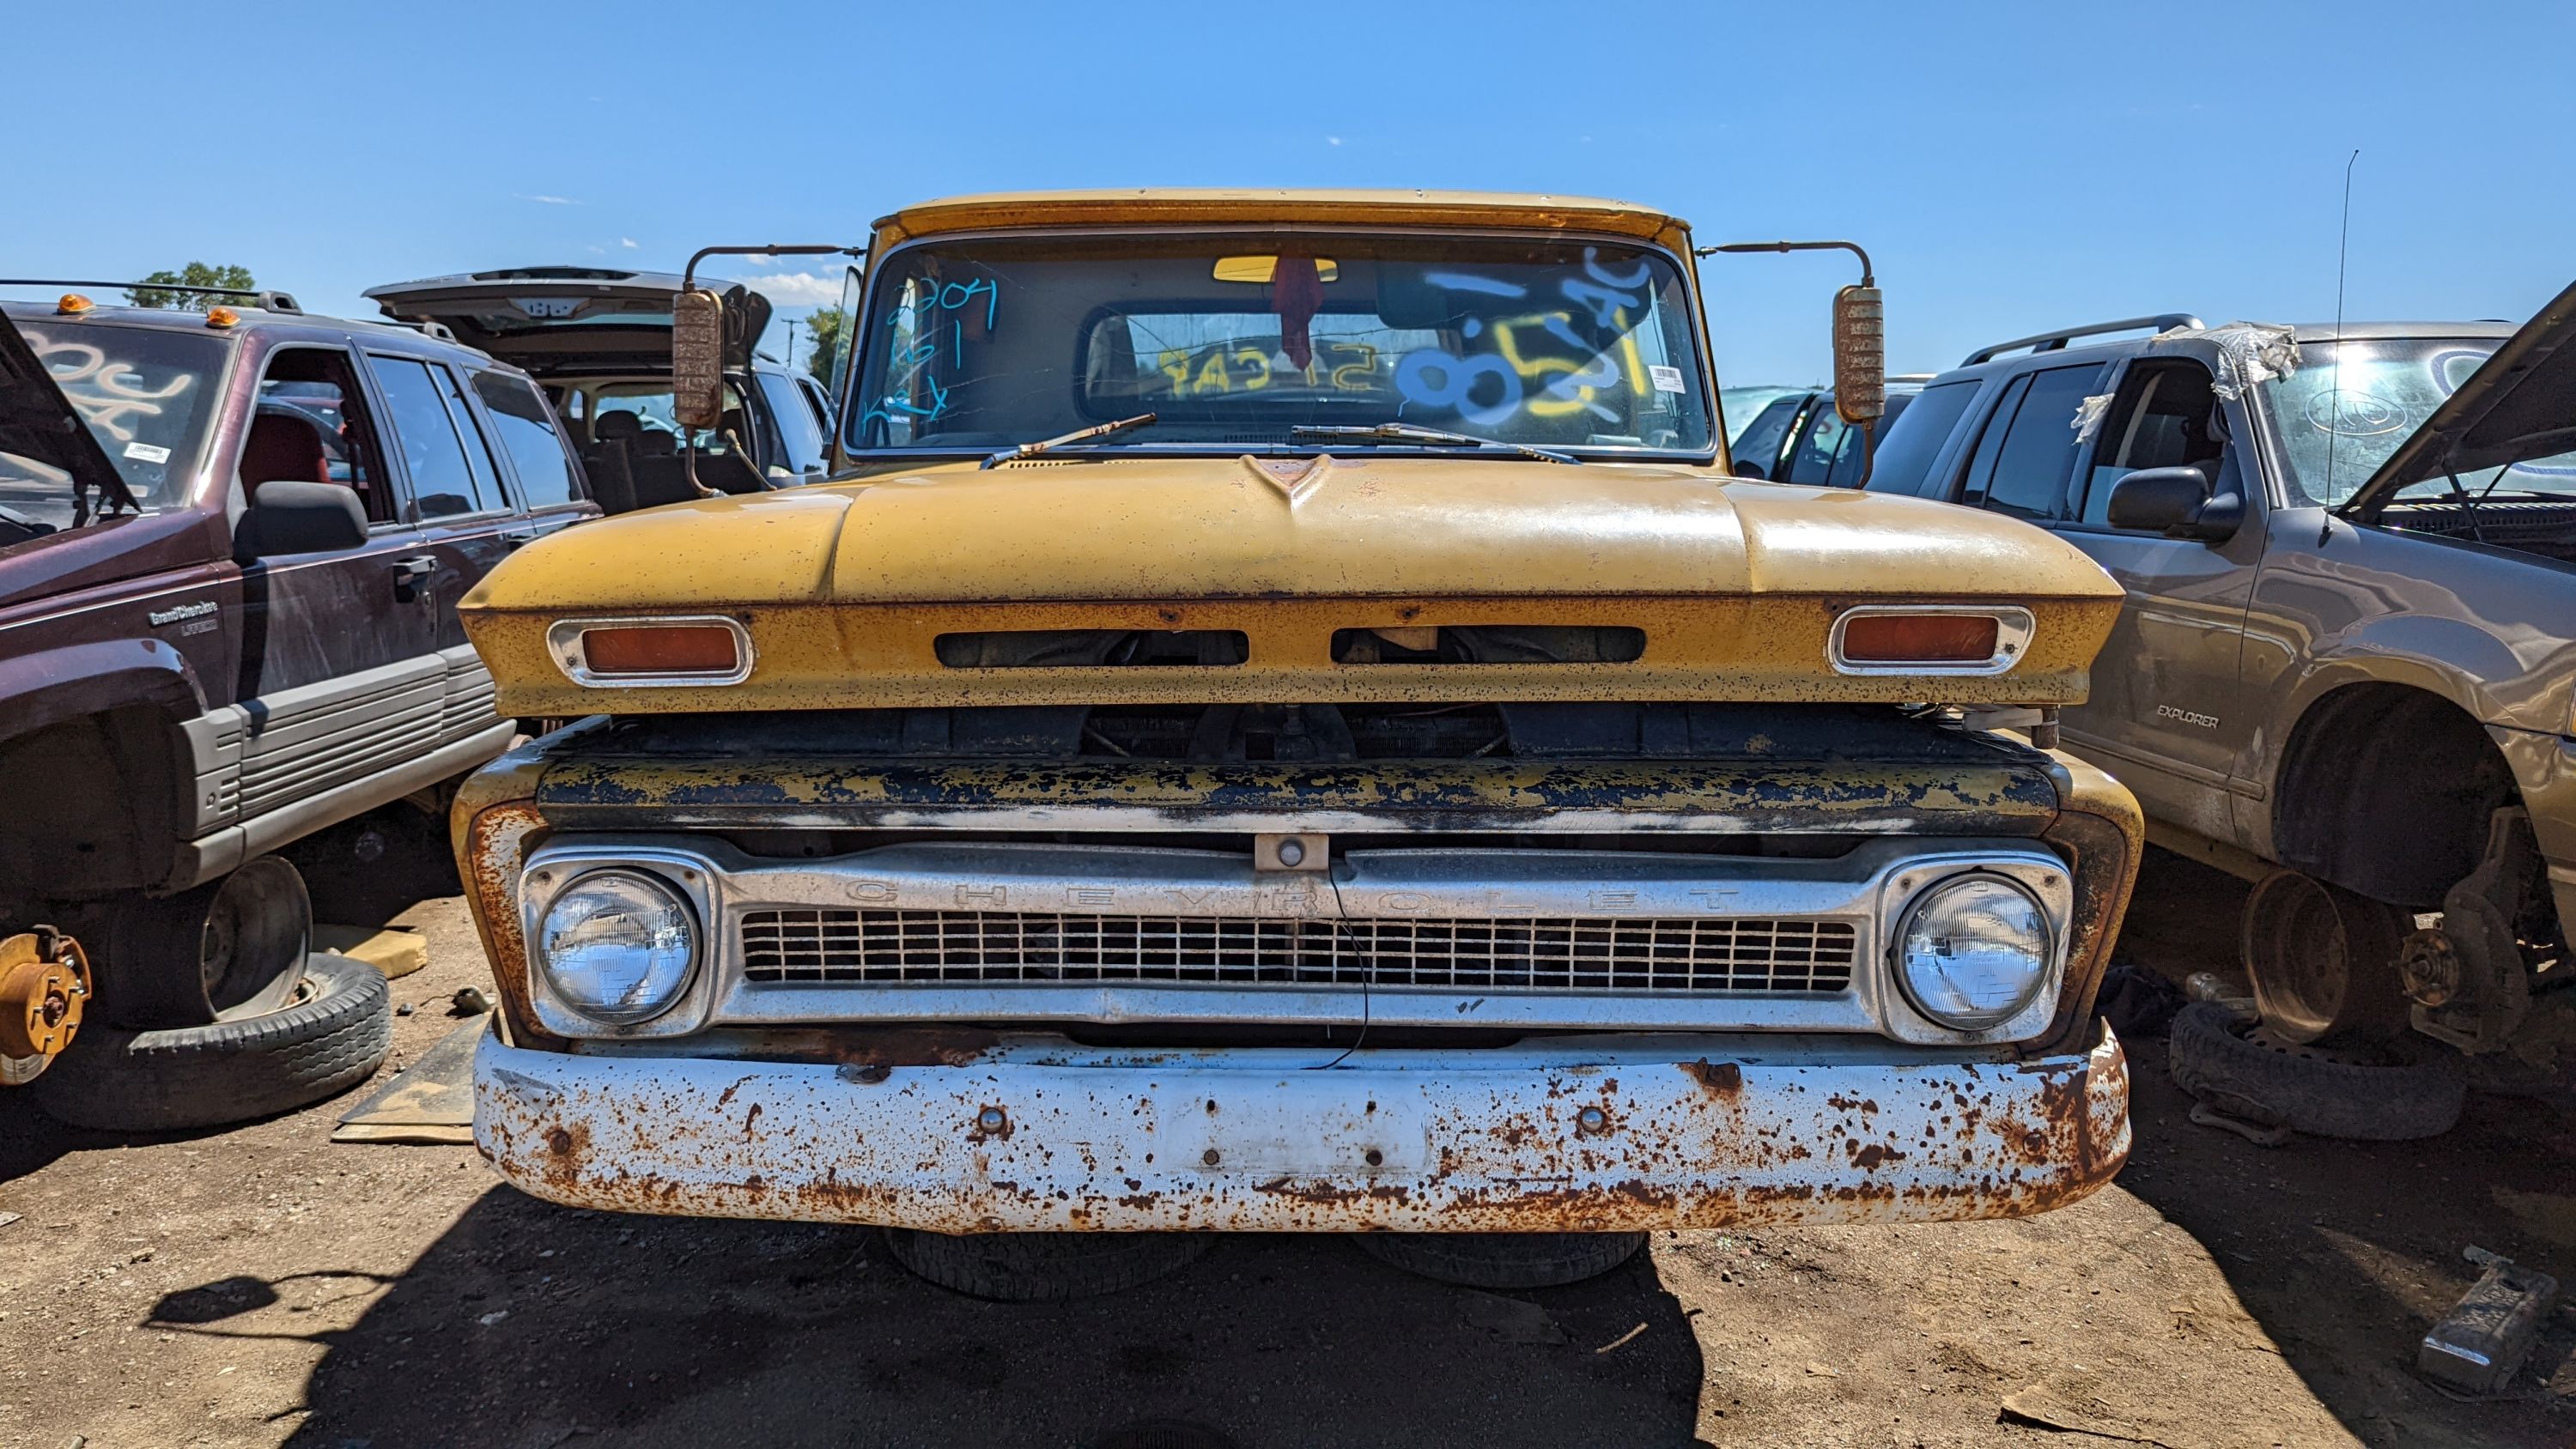 56 - 1964 Chevrolet C20 Pickup in Colorado junkyard - Photo by Murilee Martin